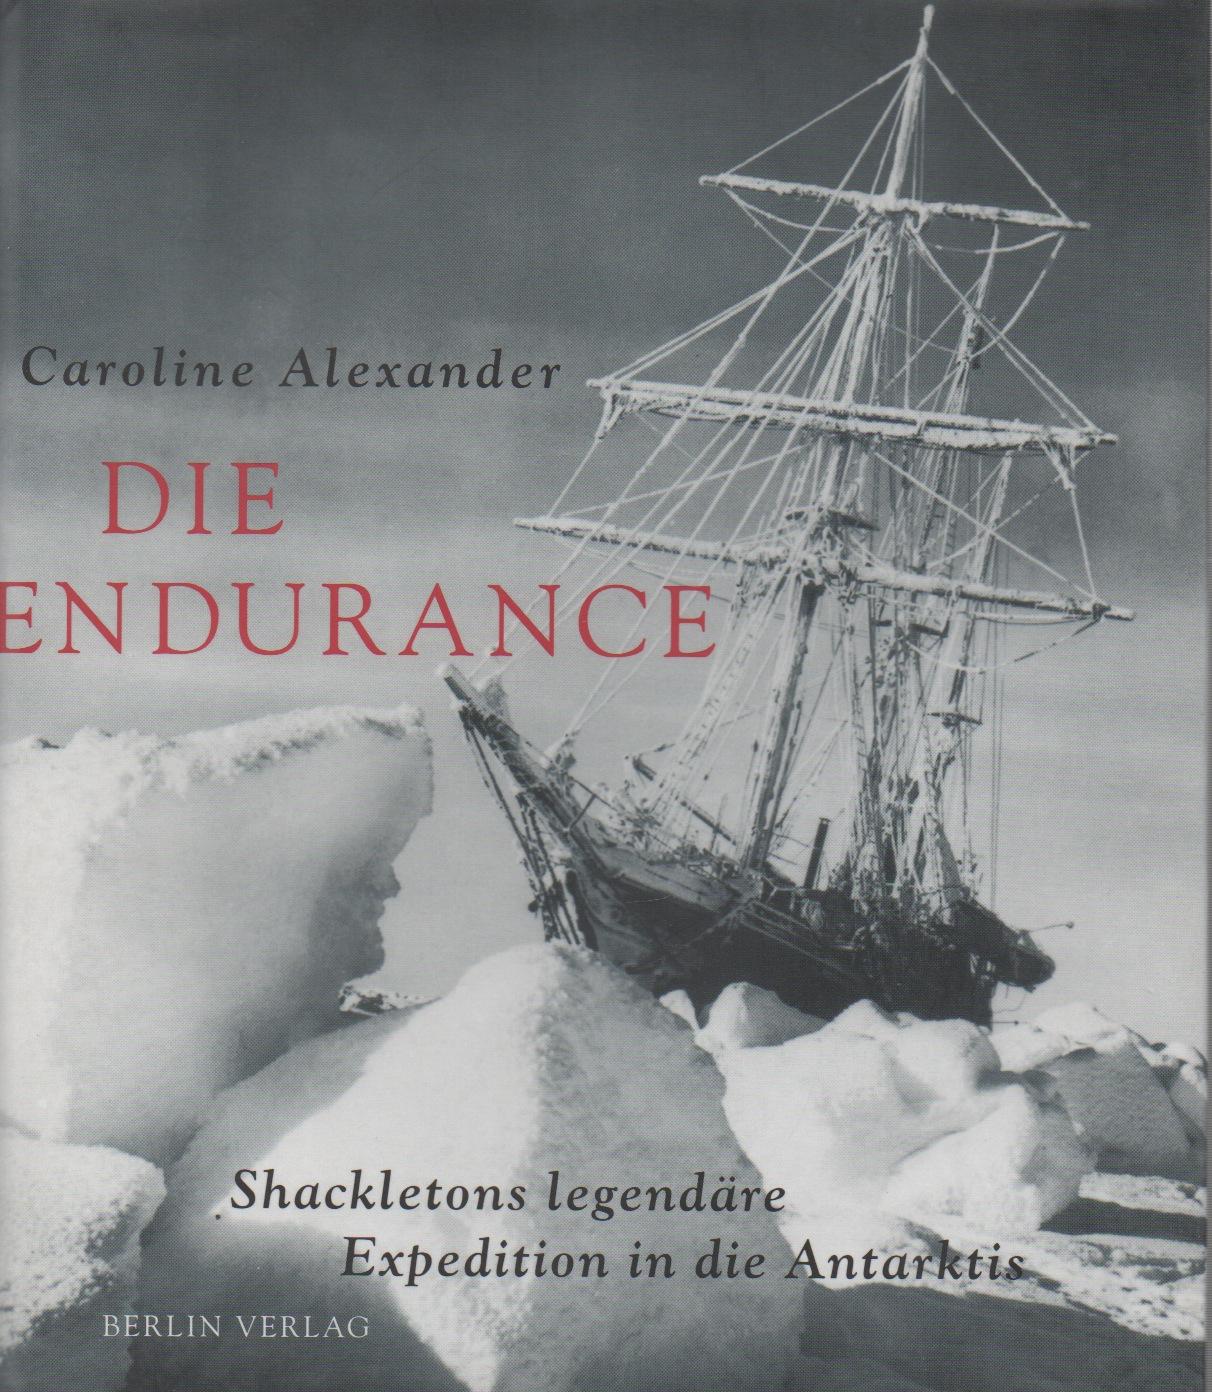 Die endurance. Shackletons legendare expedition in die antarktis (ISBN 3922138470)